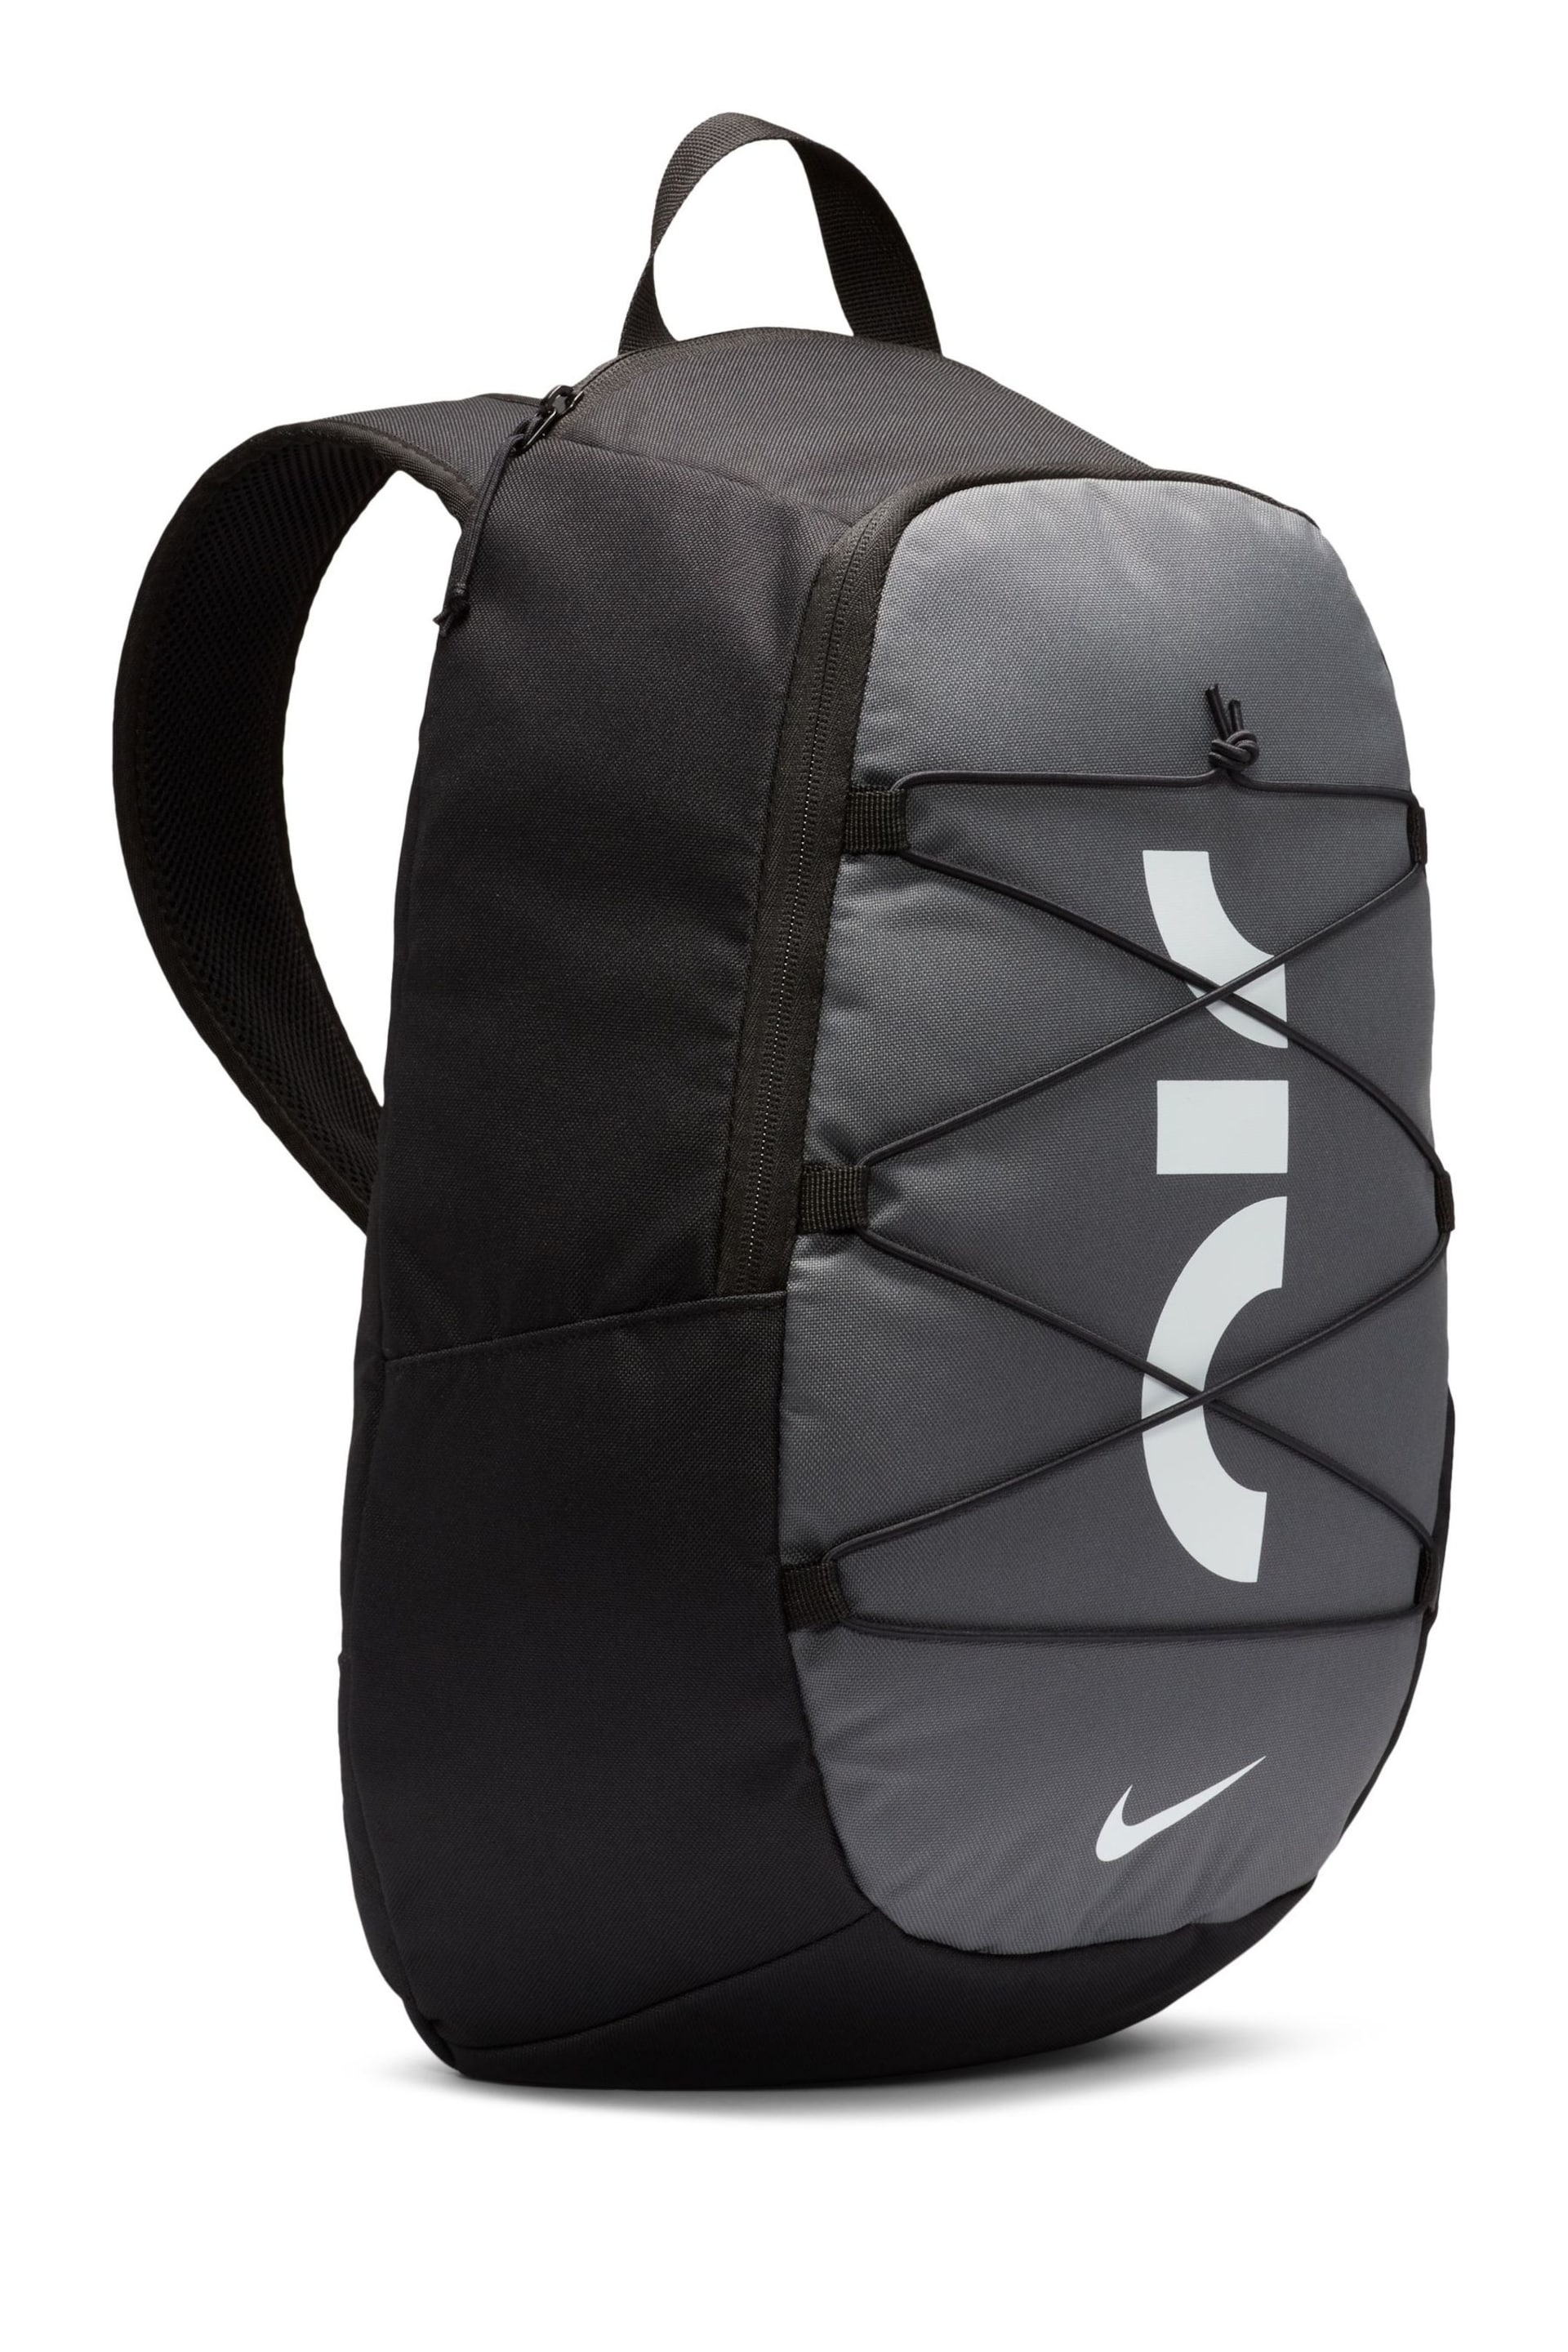 Nike Black Air GRX Backpack - Image 5 of 9